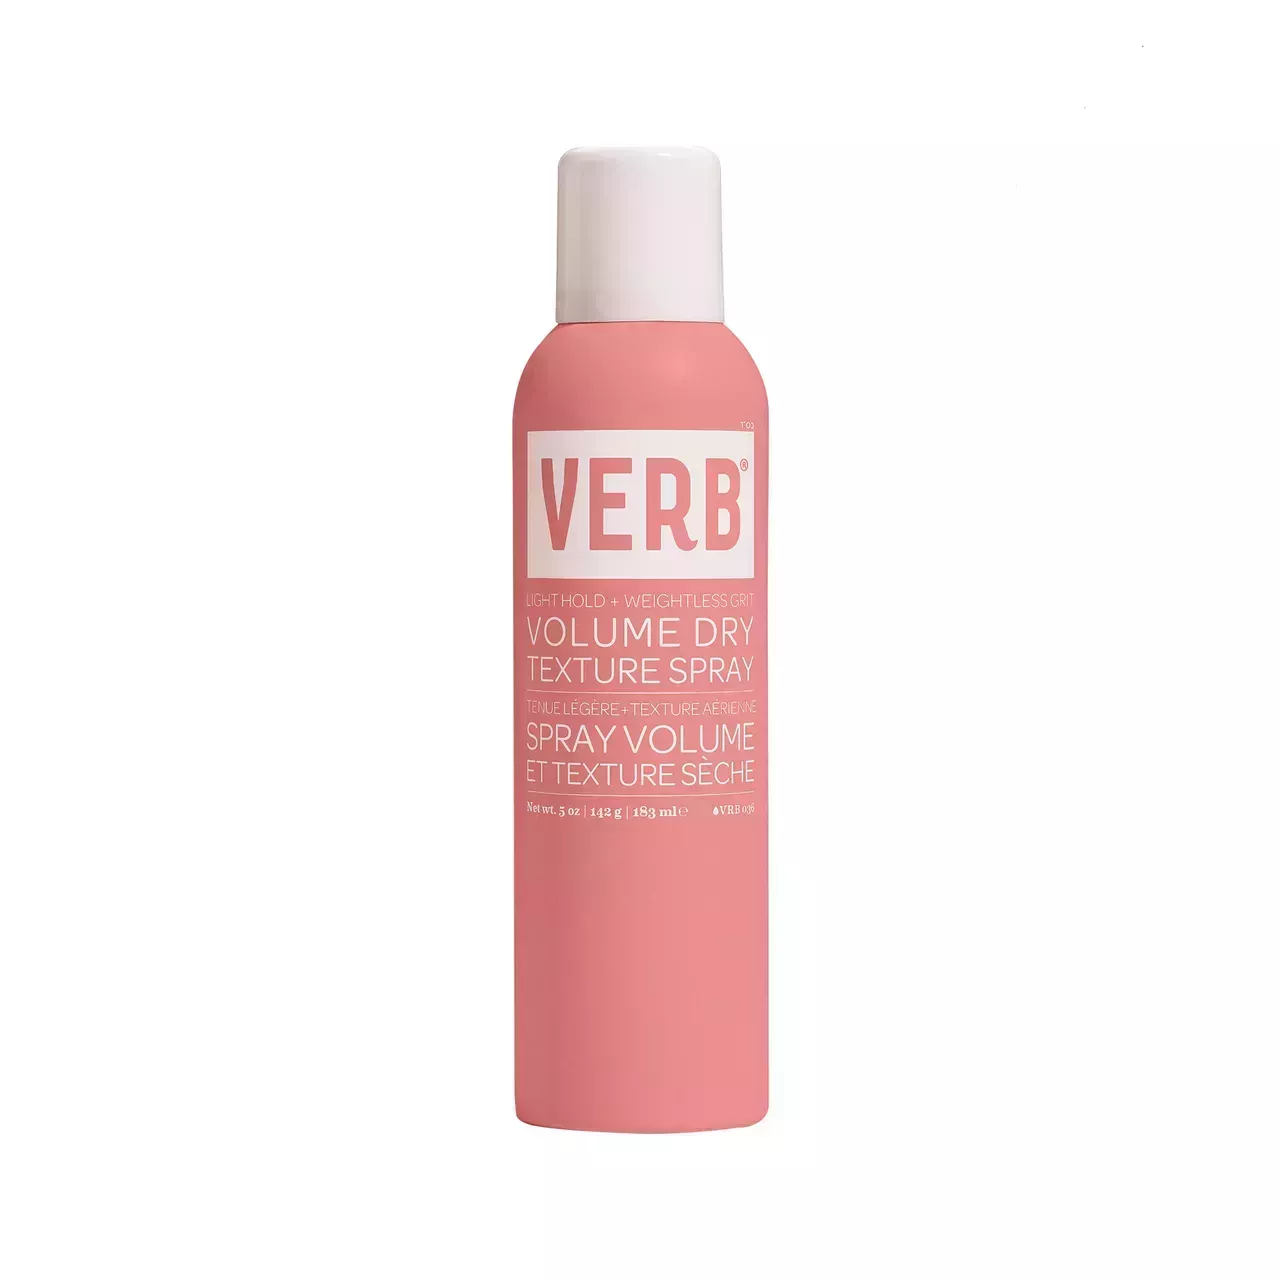 Verb Volume Dry Texture Spray on white background